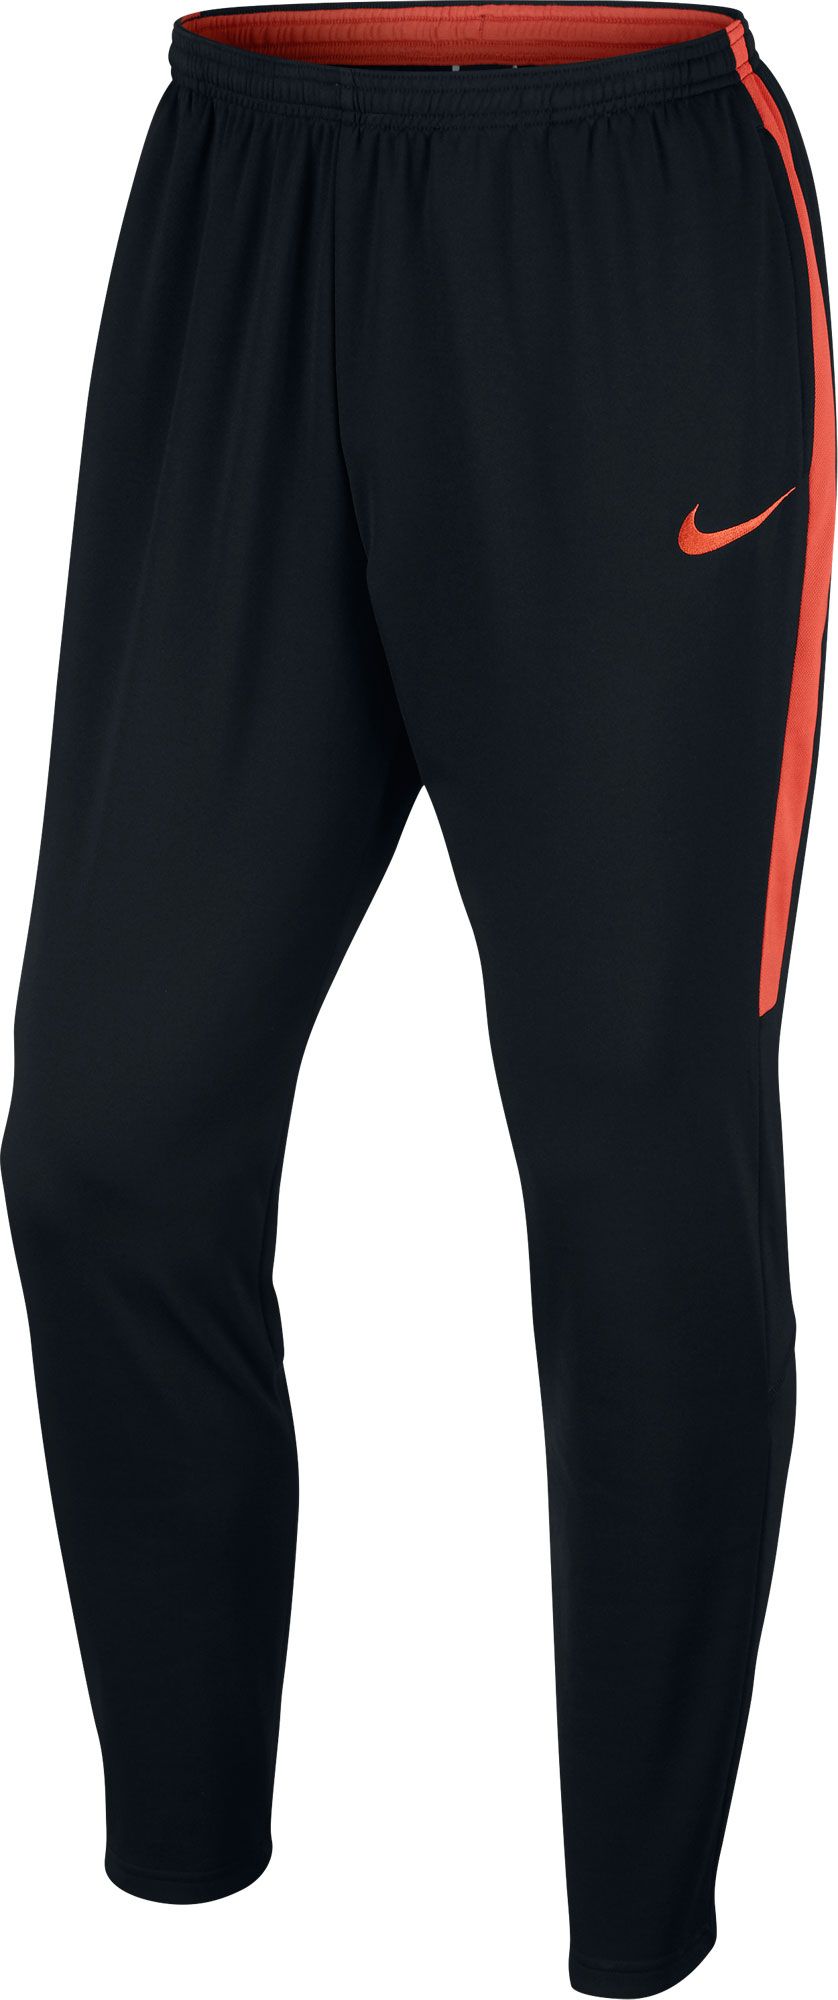 academy sports golf pants